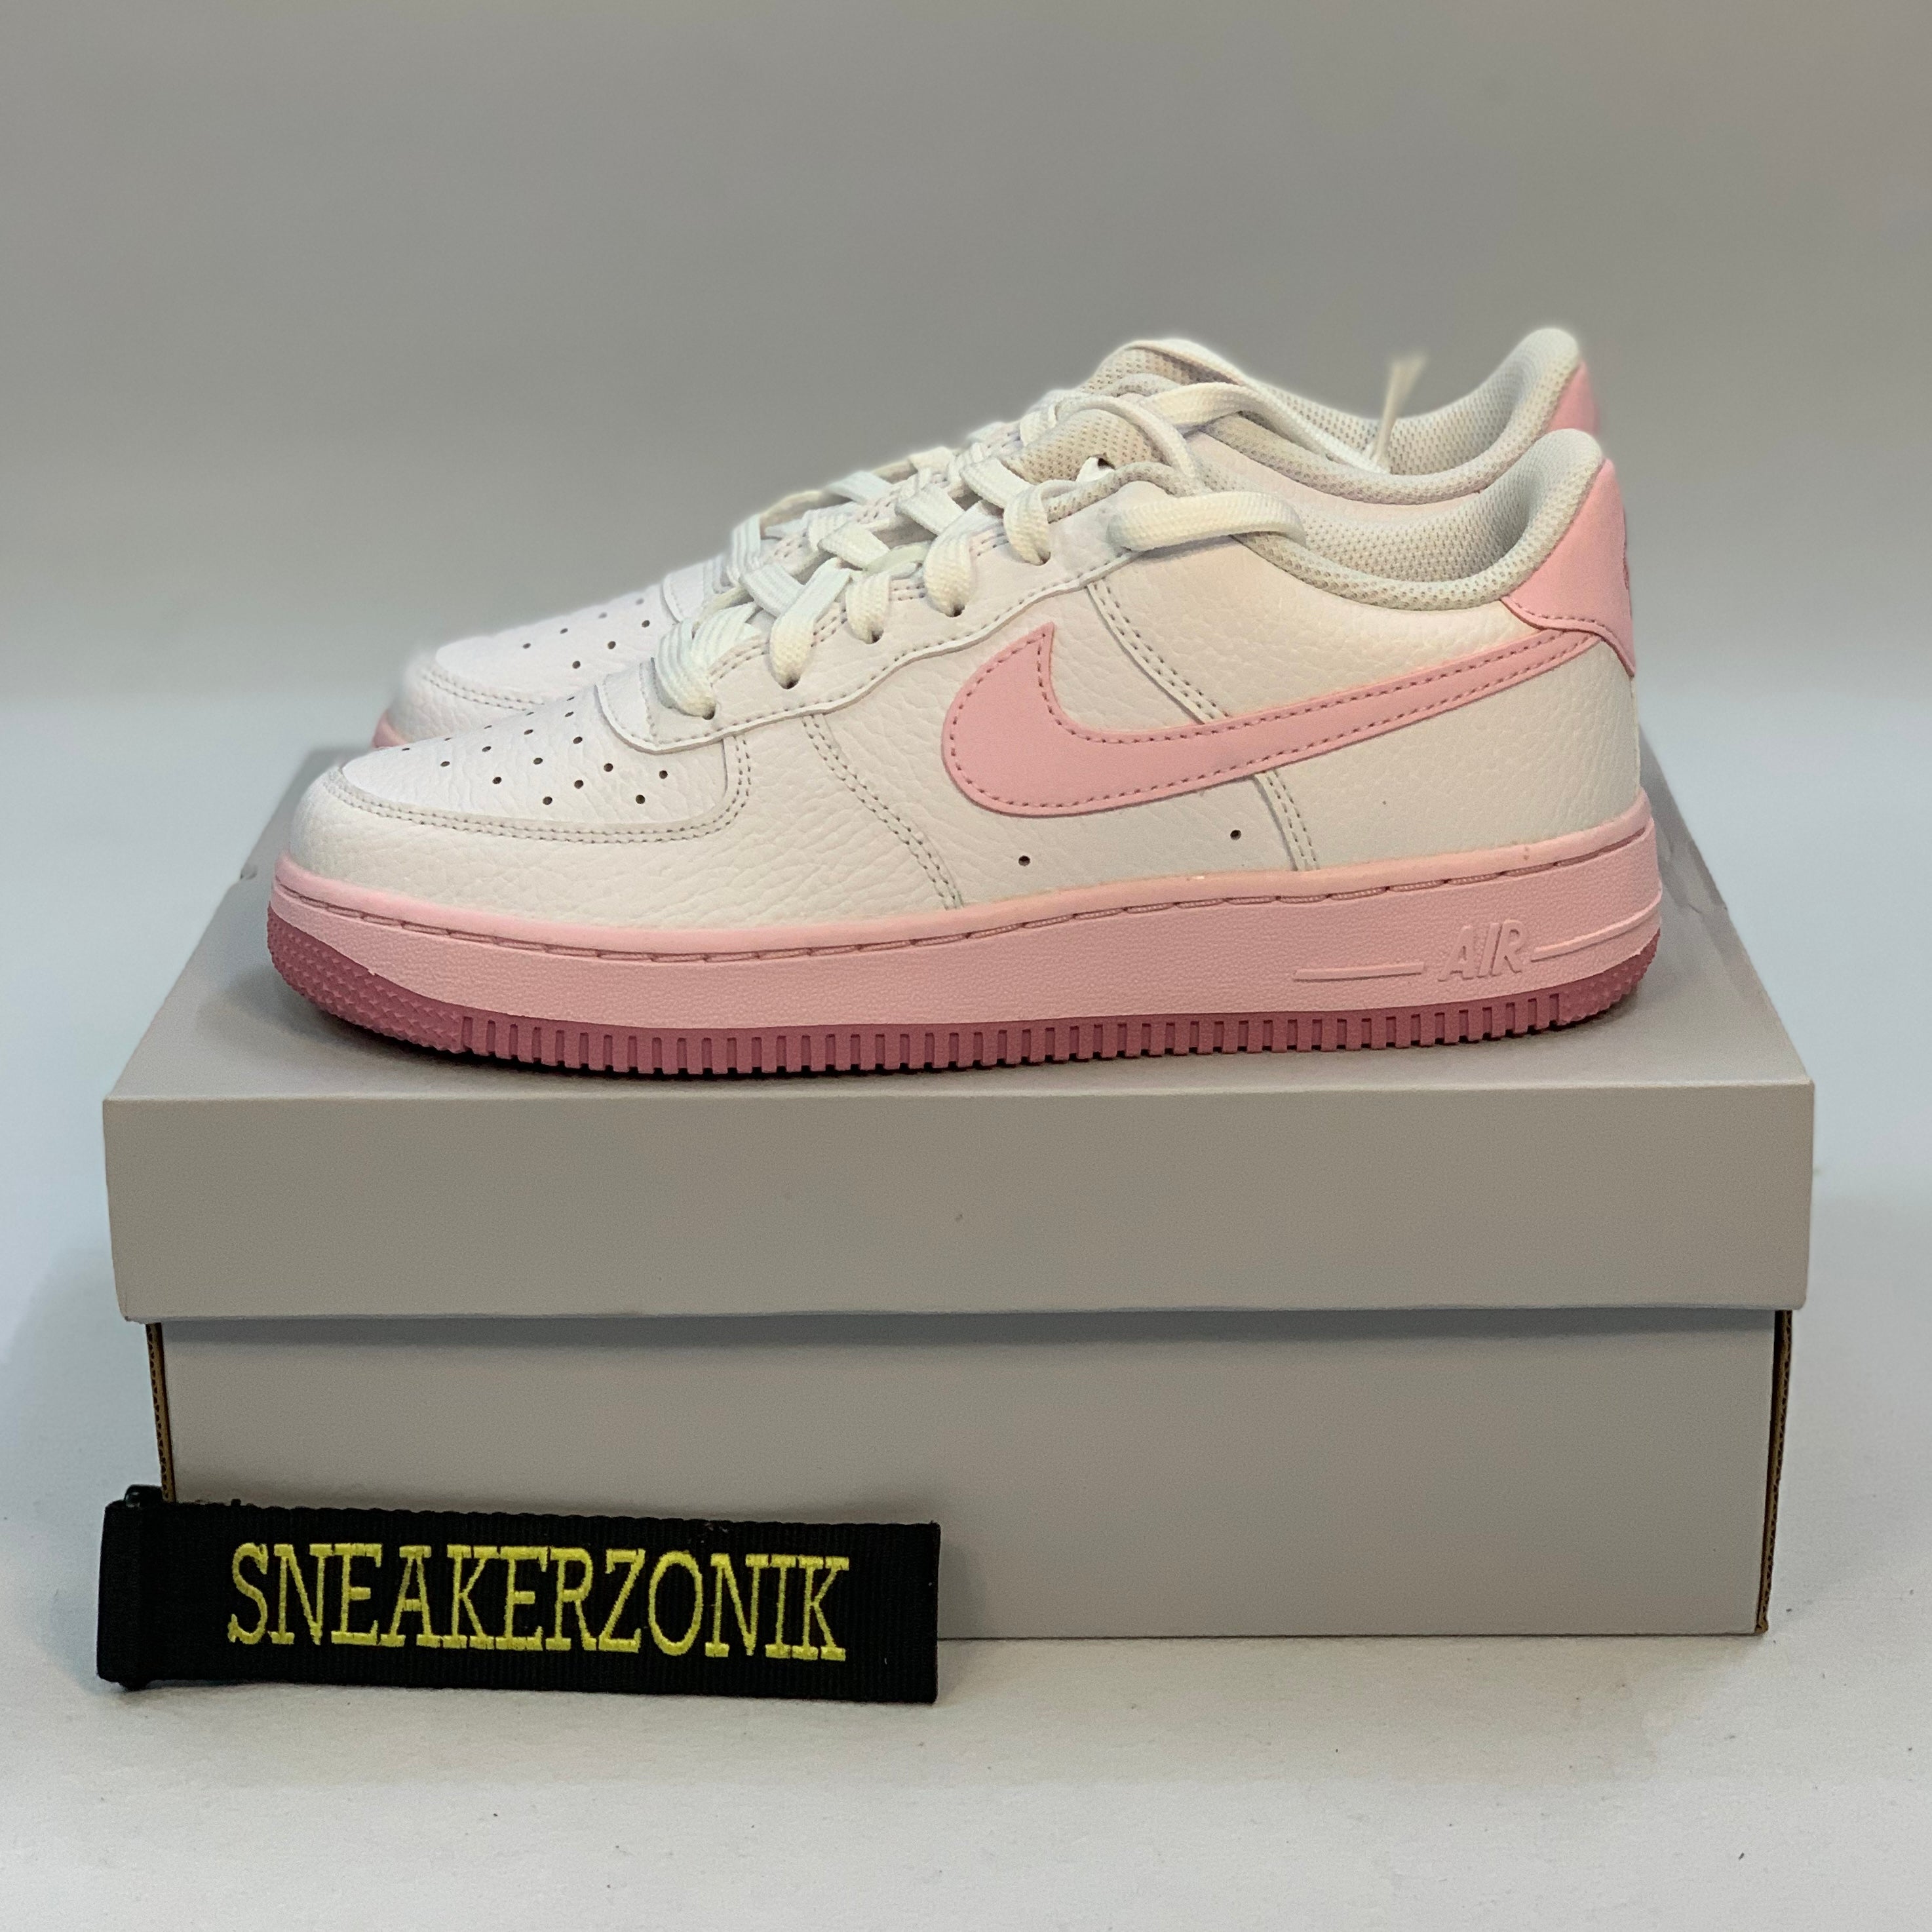 Nike Air Force 1 White Pink (GS) sneakerzonik